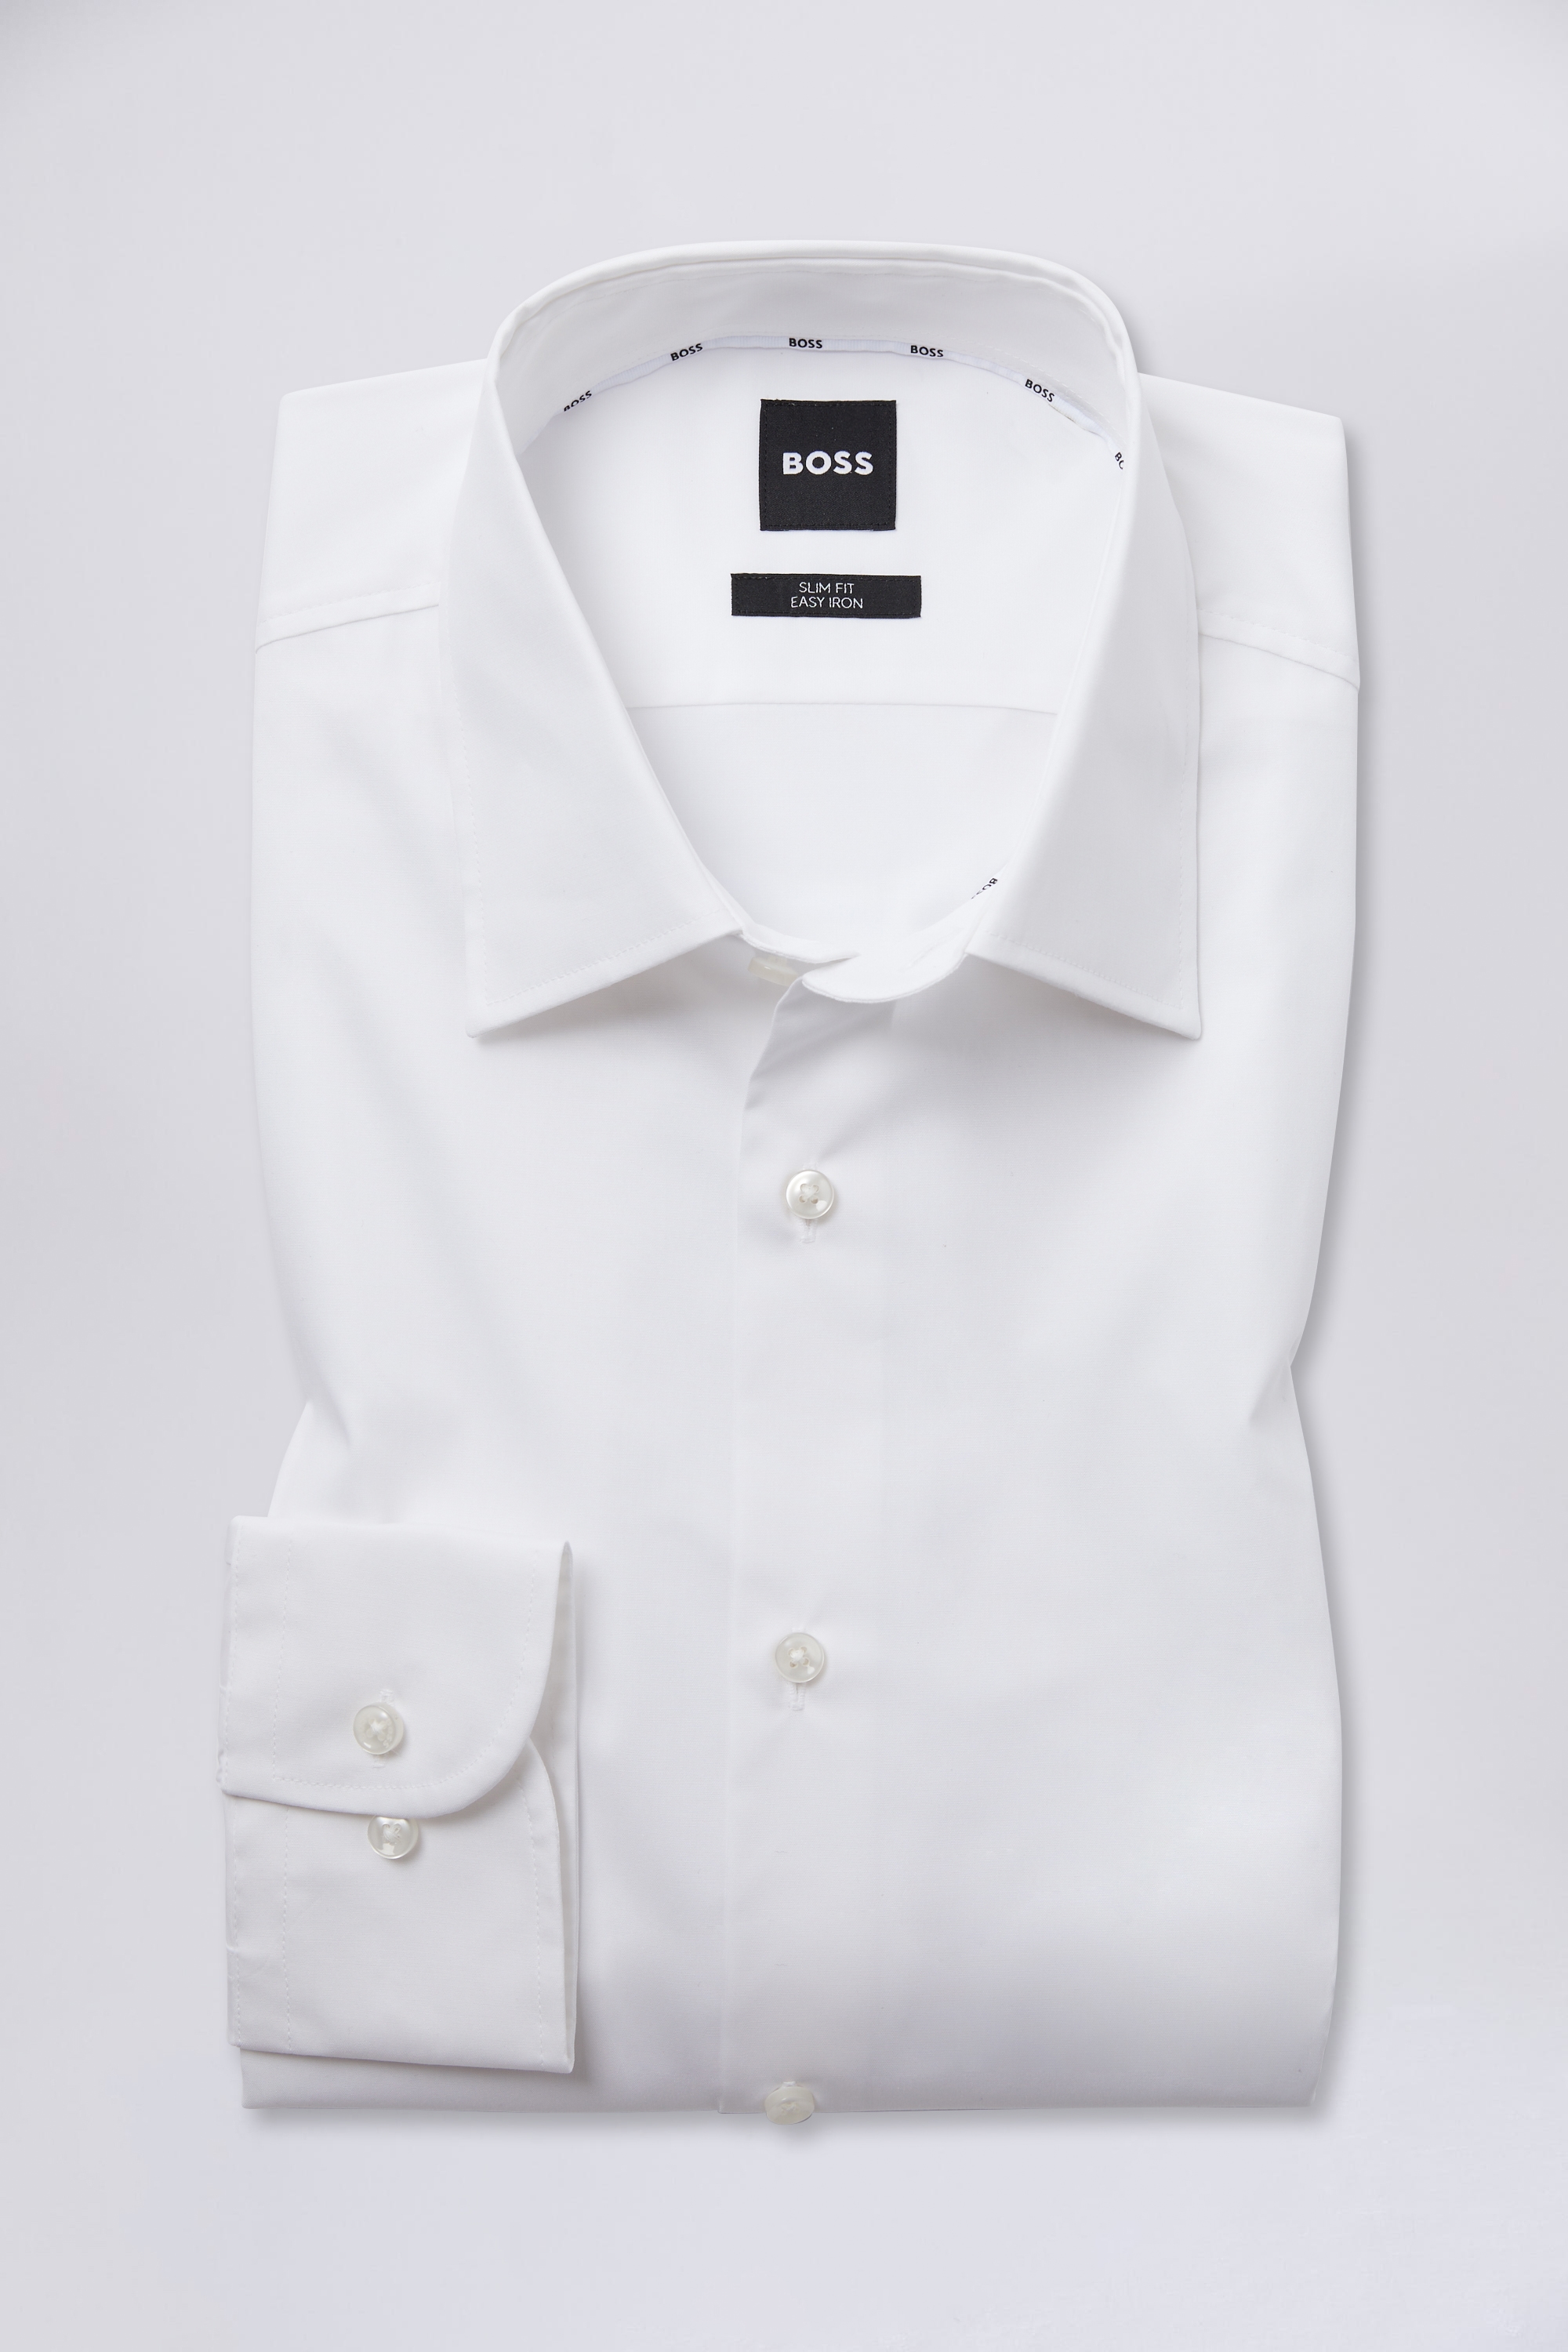 Boss Slim Fit White Shirt | Buy Online at Moss